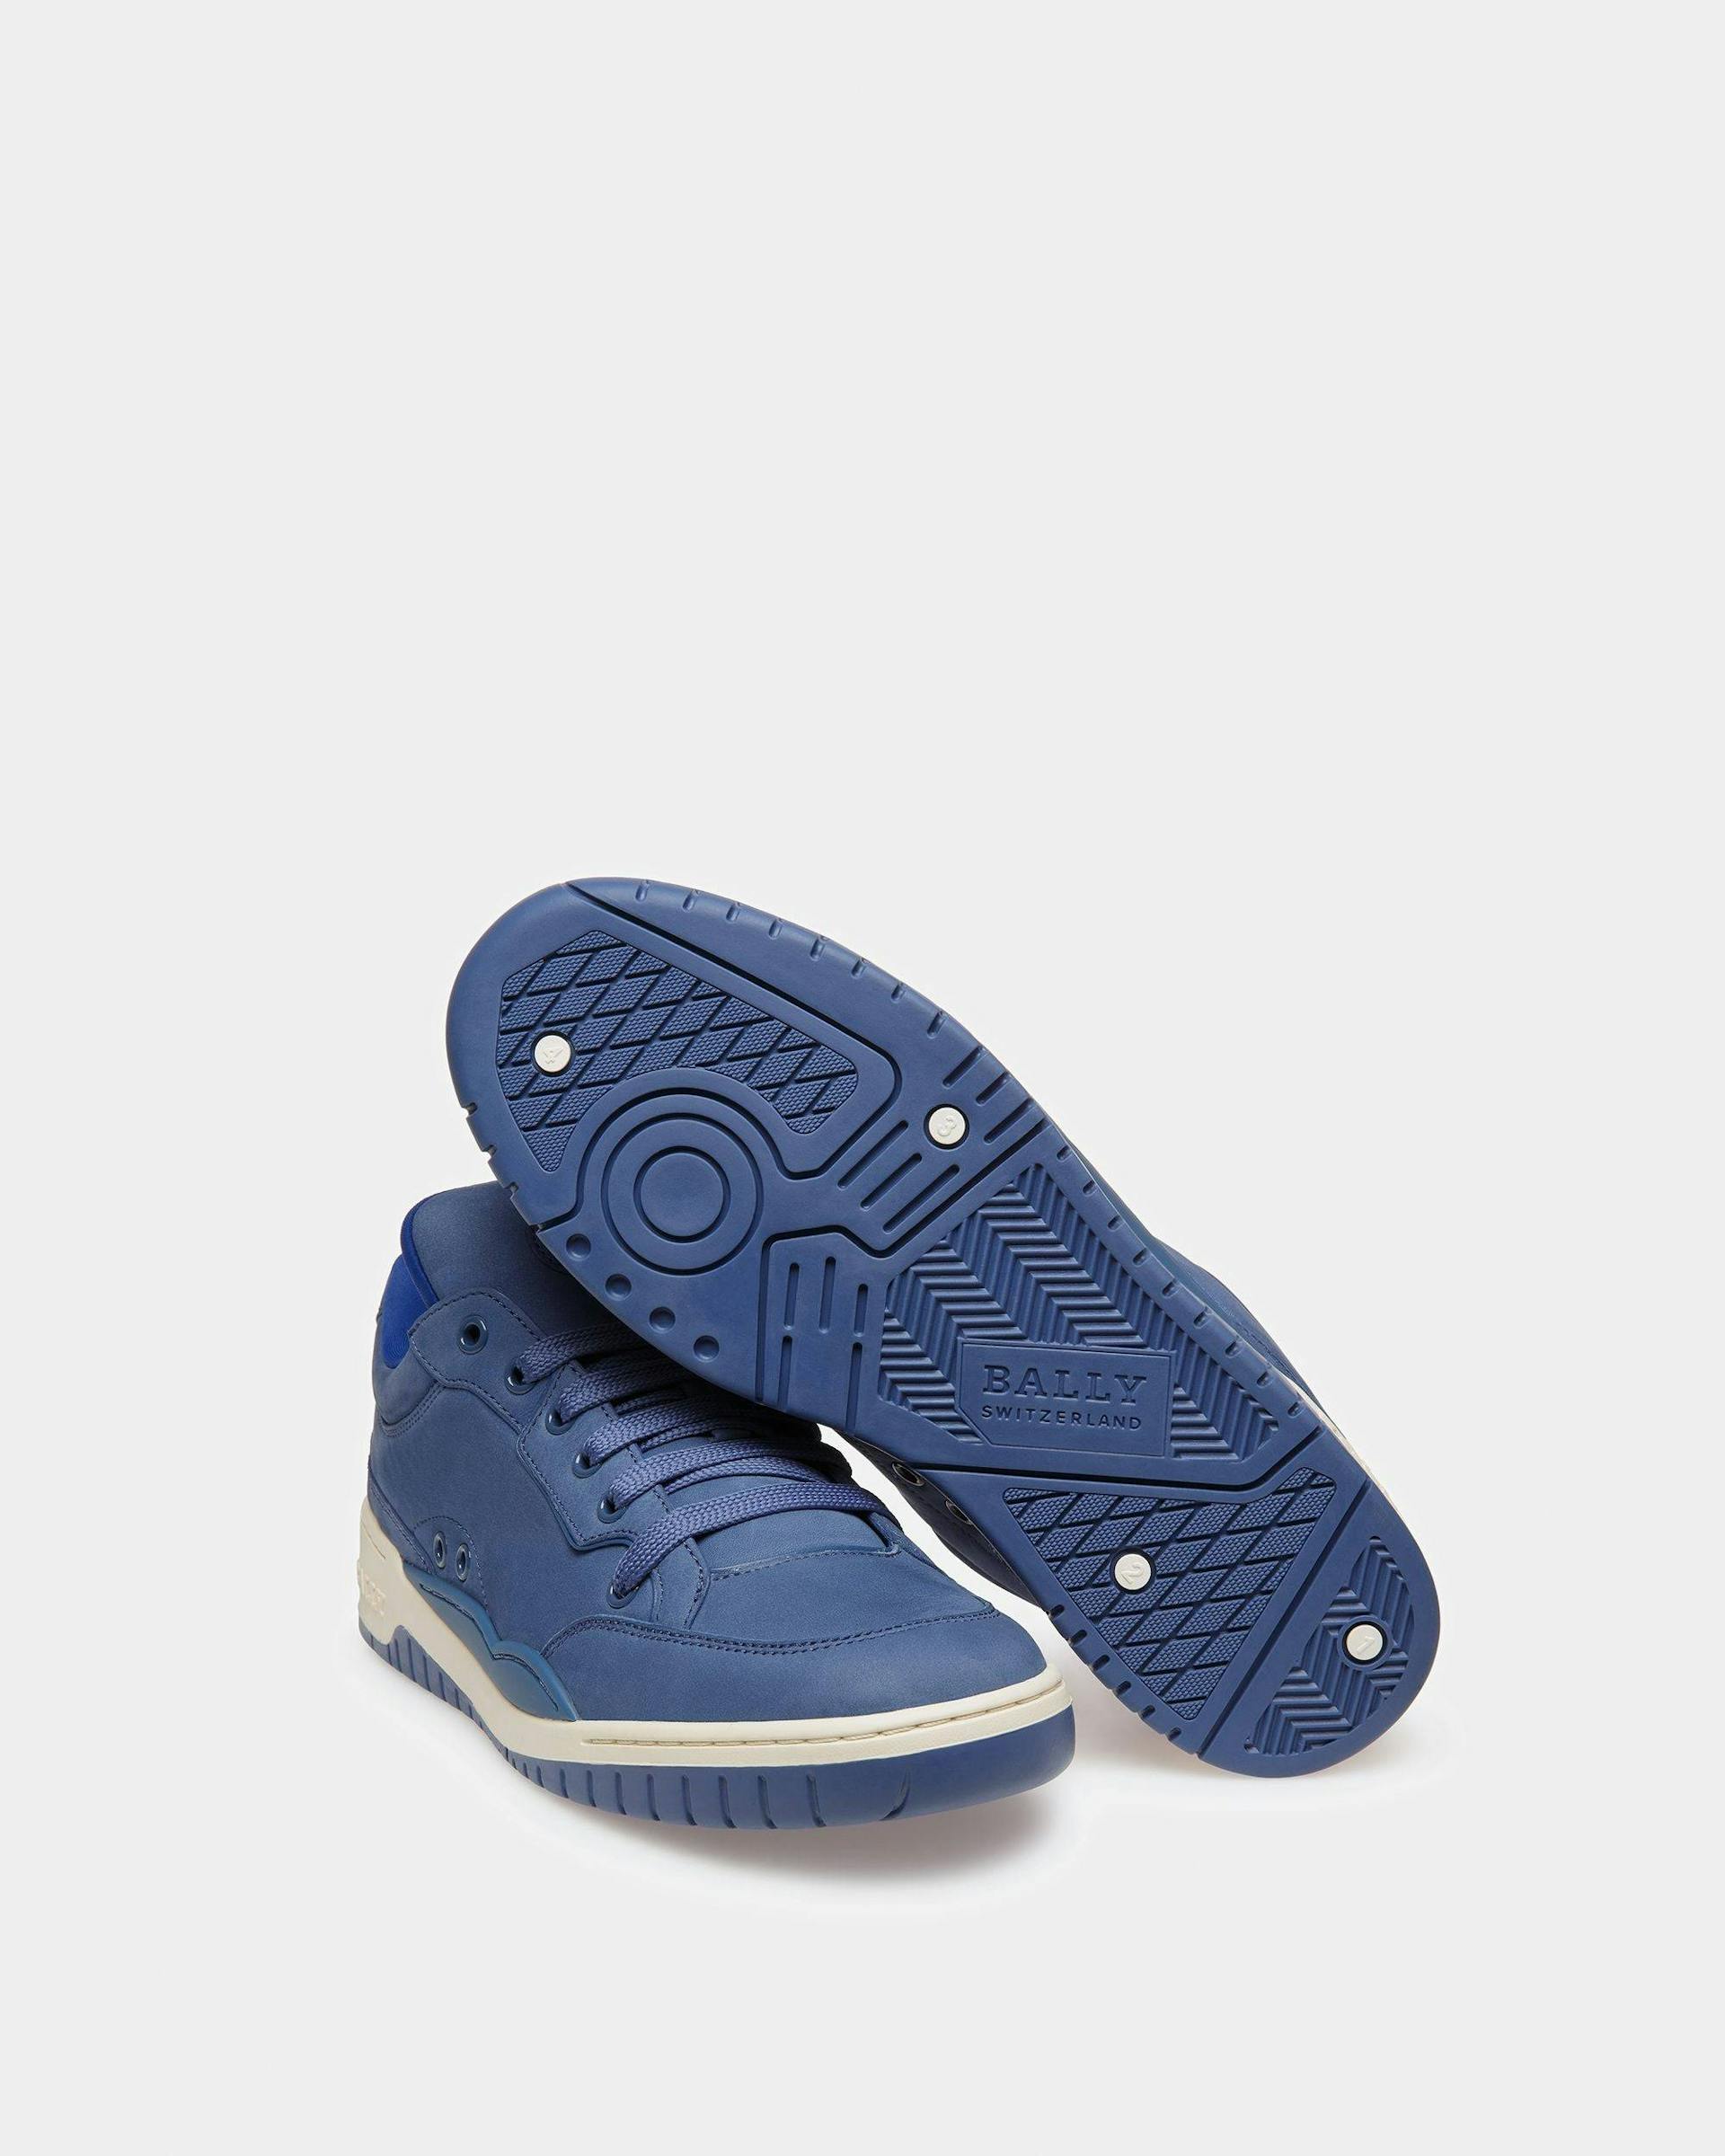 Kiro Leather Sneakers In Blue Neon - Men's - Bally - 05